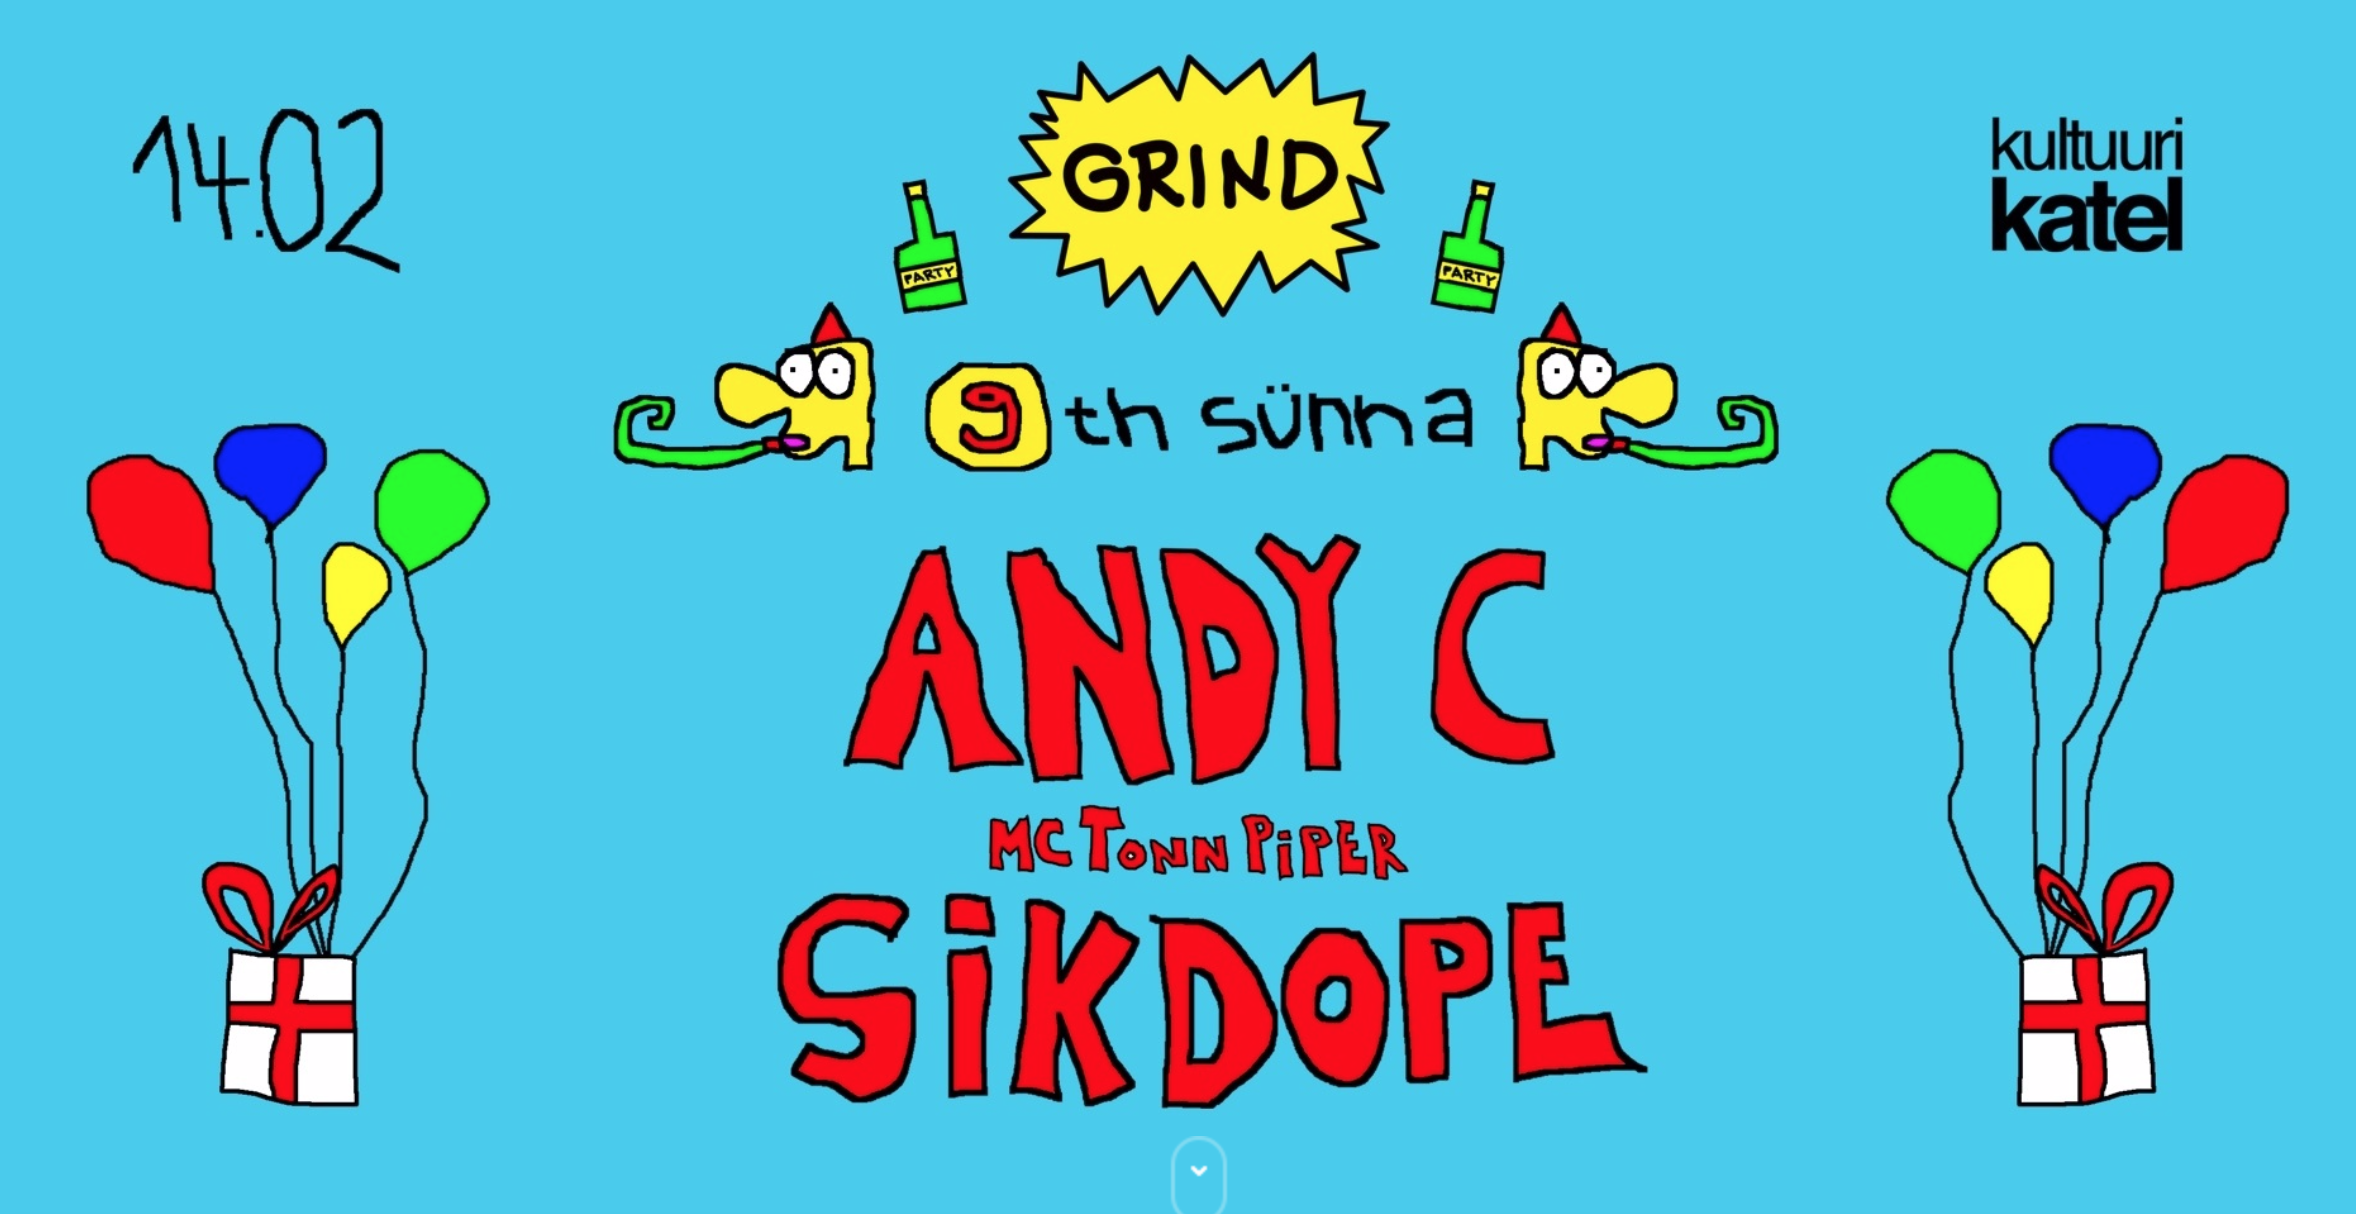 12651GRIND PRESENTS: ANDY C & SIKDOPE